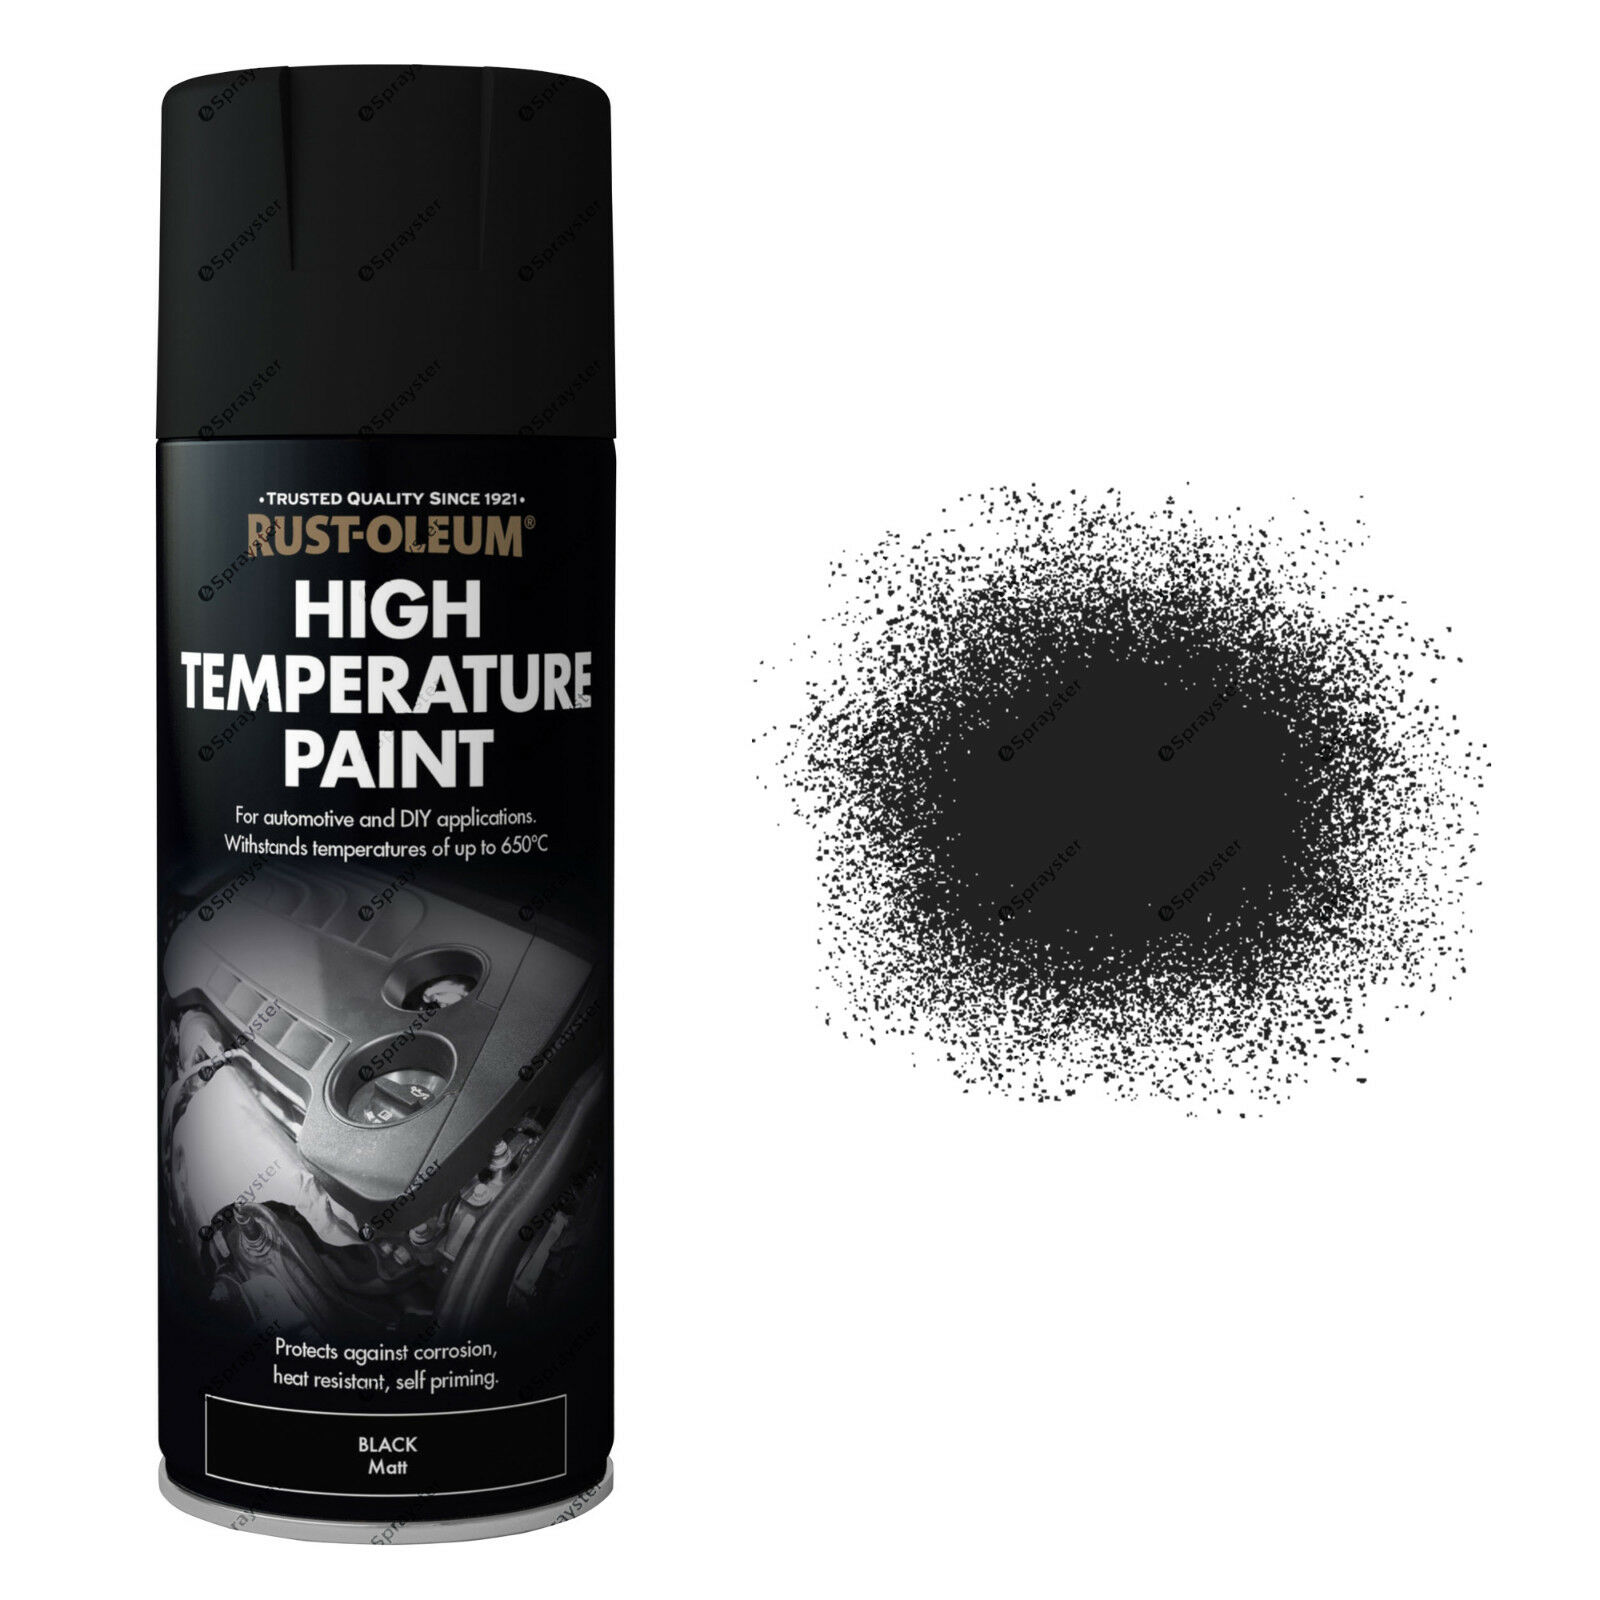 Rustoleum High Heat Paint Luxury Details About X11 Rust Oleum Auto Automotive Car Aerosol Spray Paint High Temperature Black